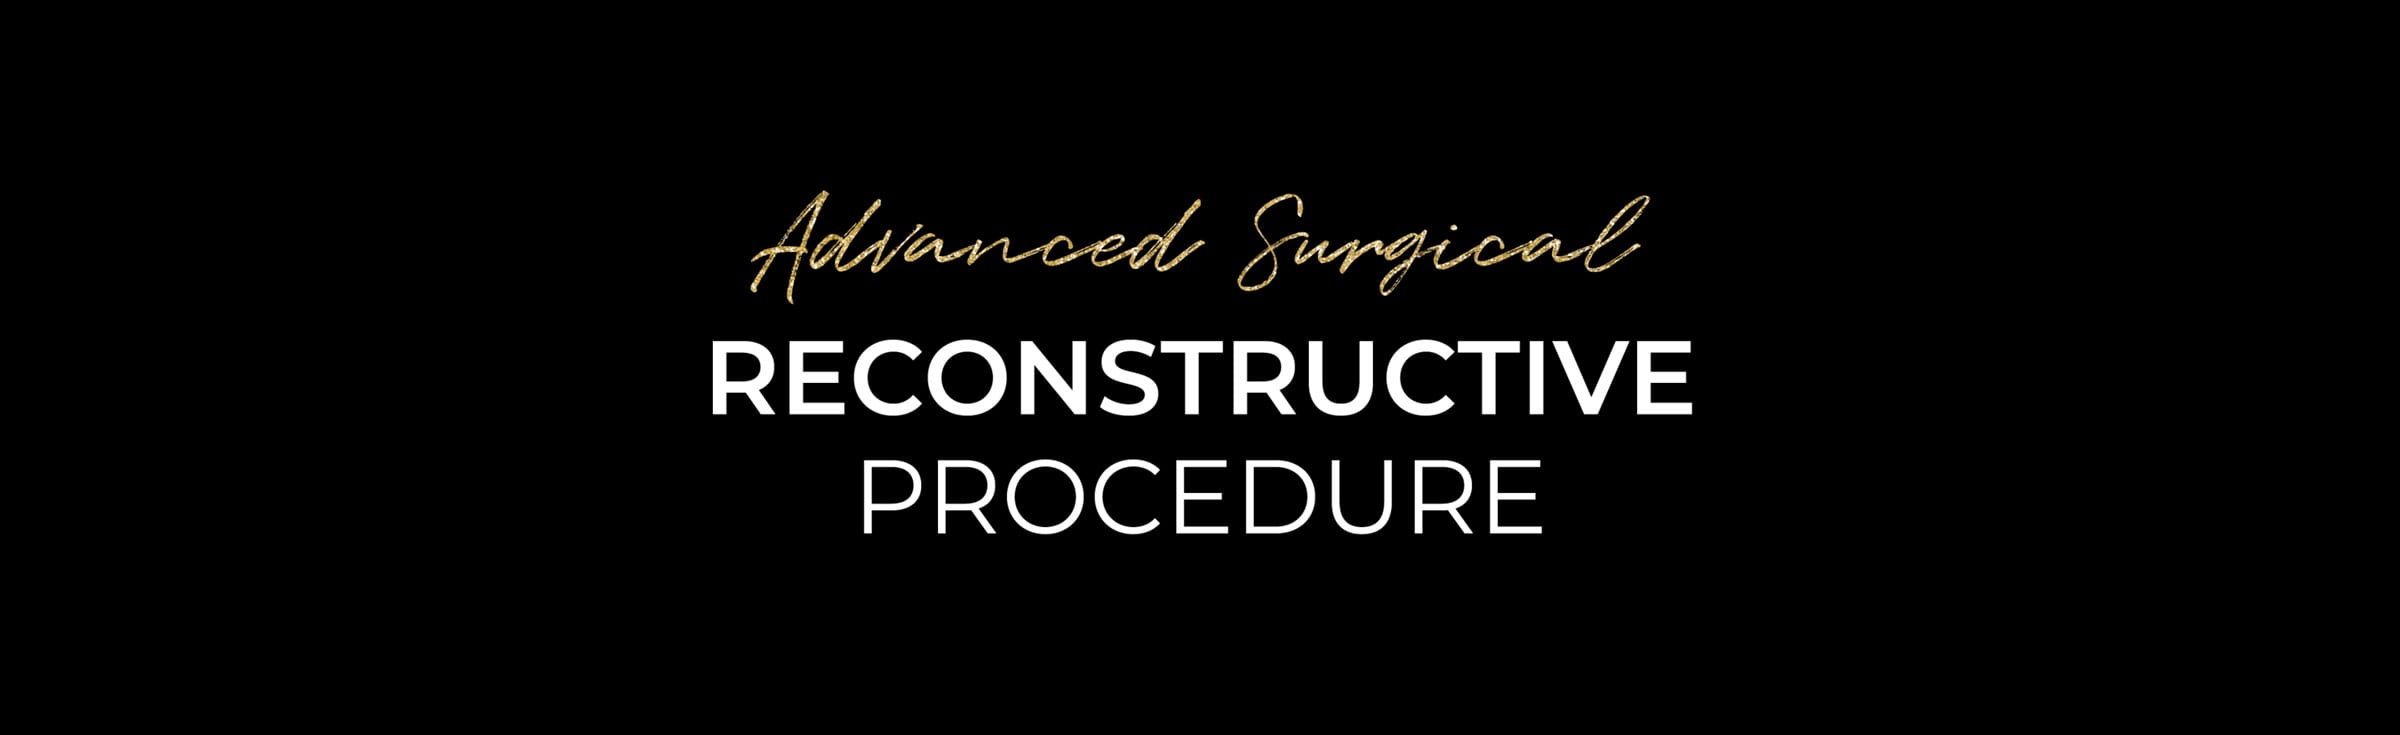 reconstructive-procedure-mohs-reconstruction